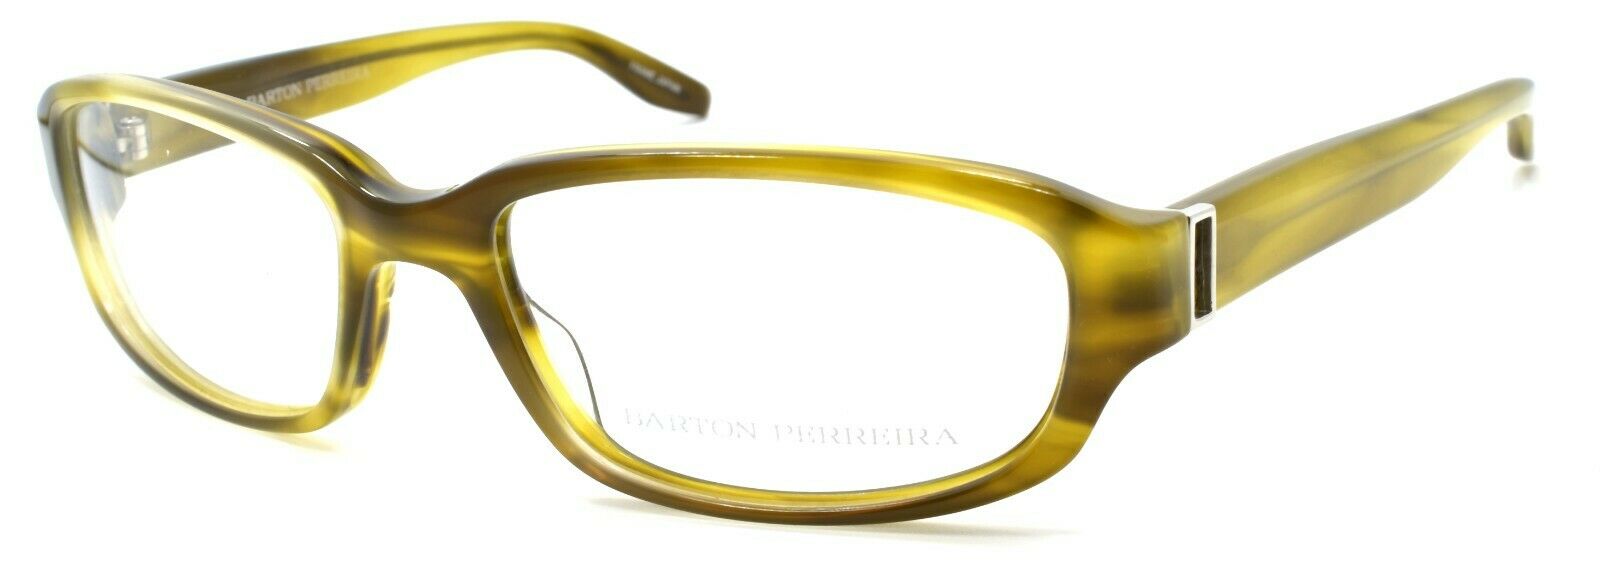 1-Barton Perreira Accomplice SOT Unisex Eyeglasses Frames 55-17-136 Olive Tortoise-672263037675-IKSpecs